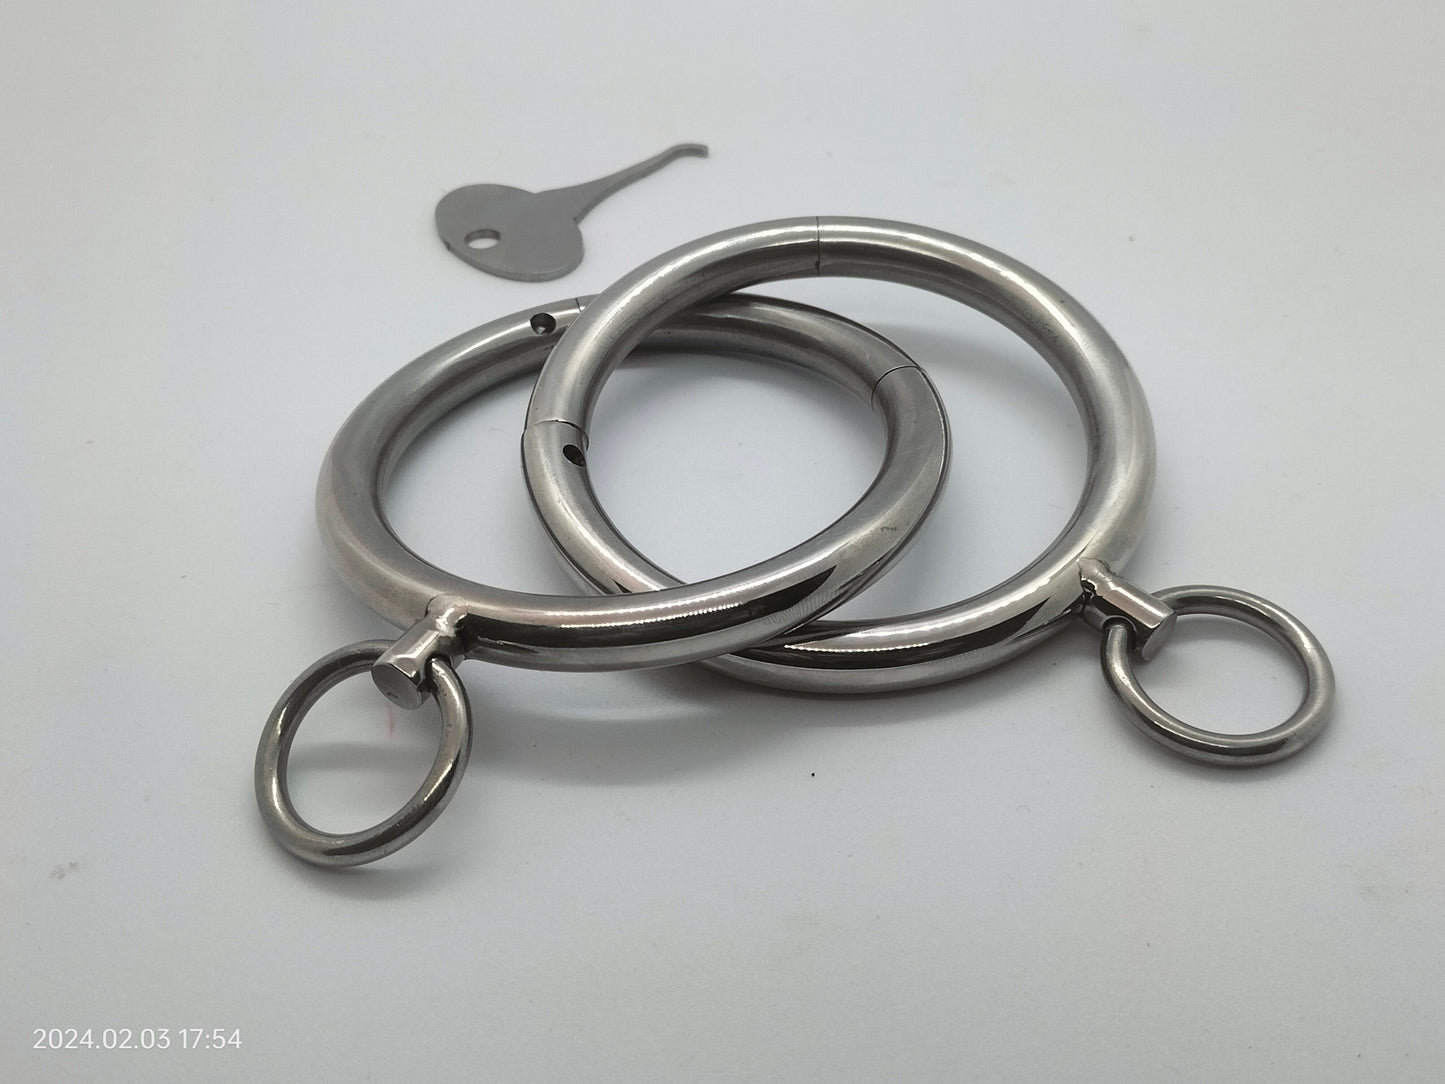 Metal wrist/ankle cuffs medium